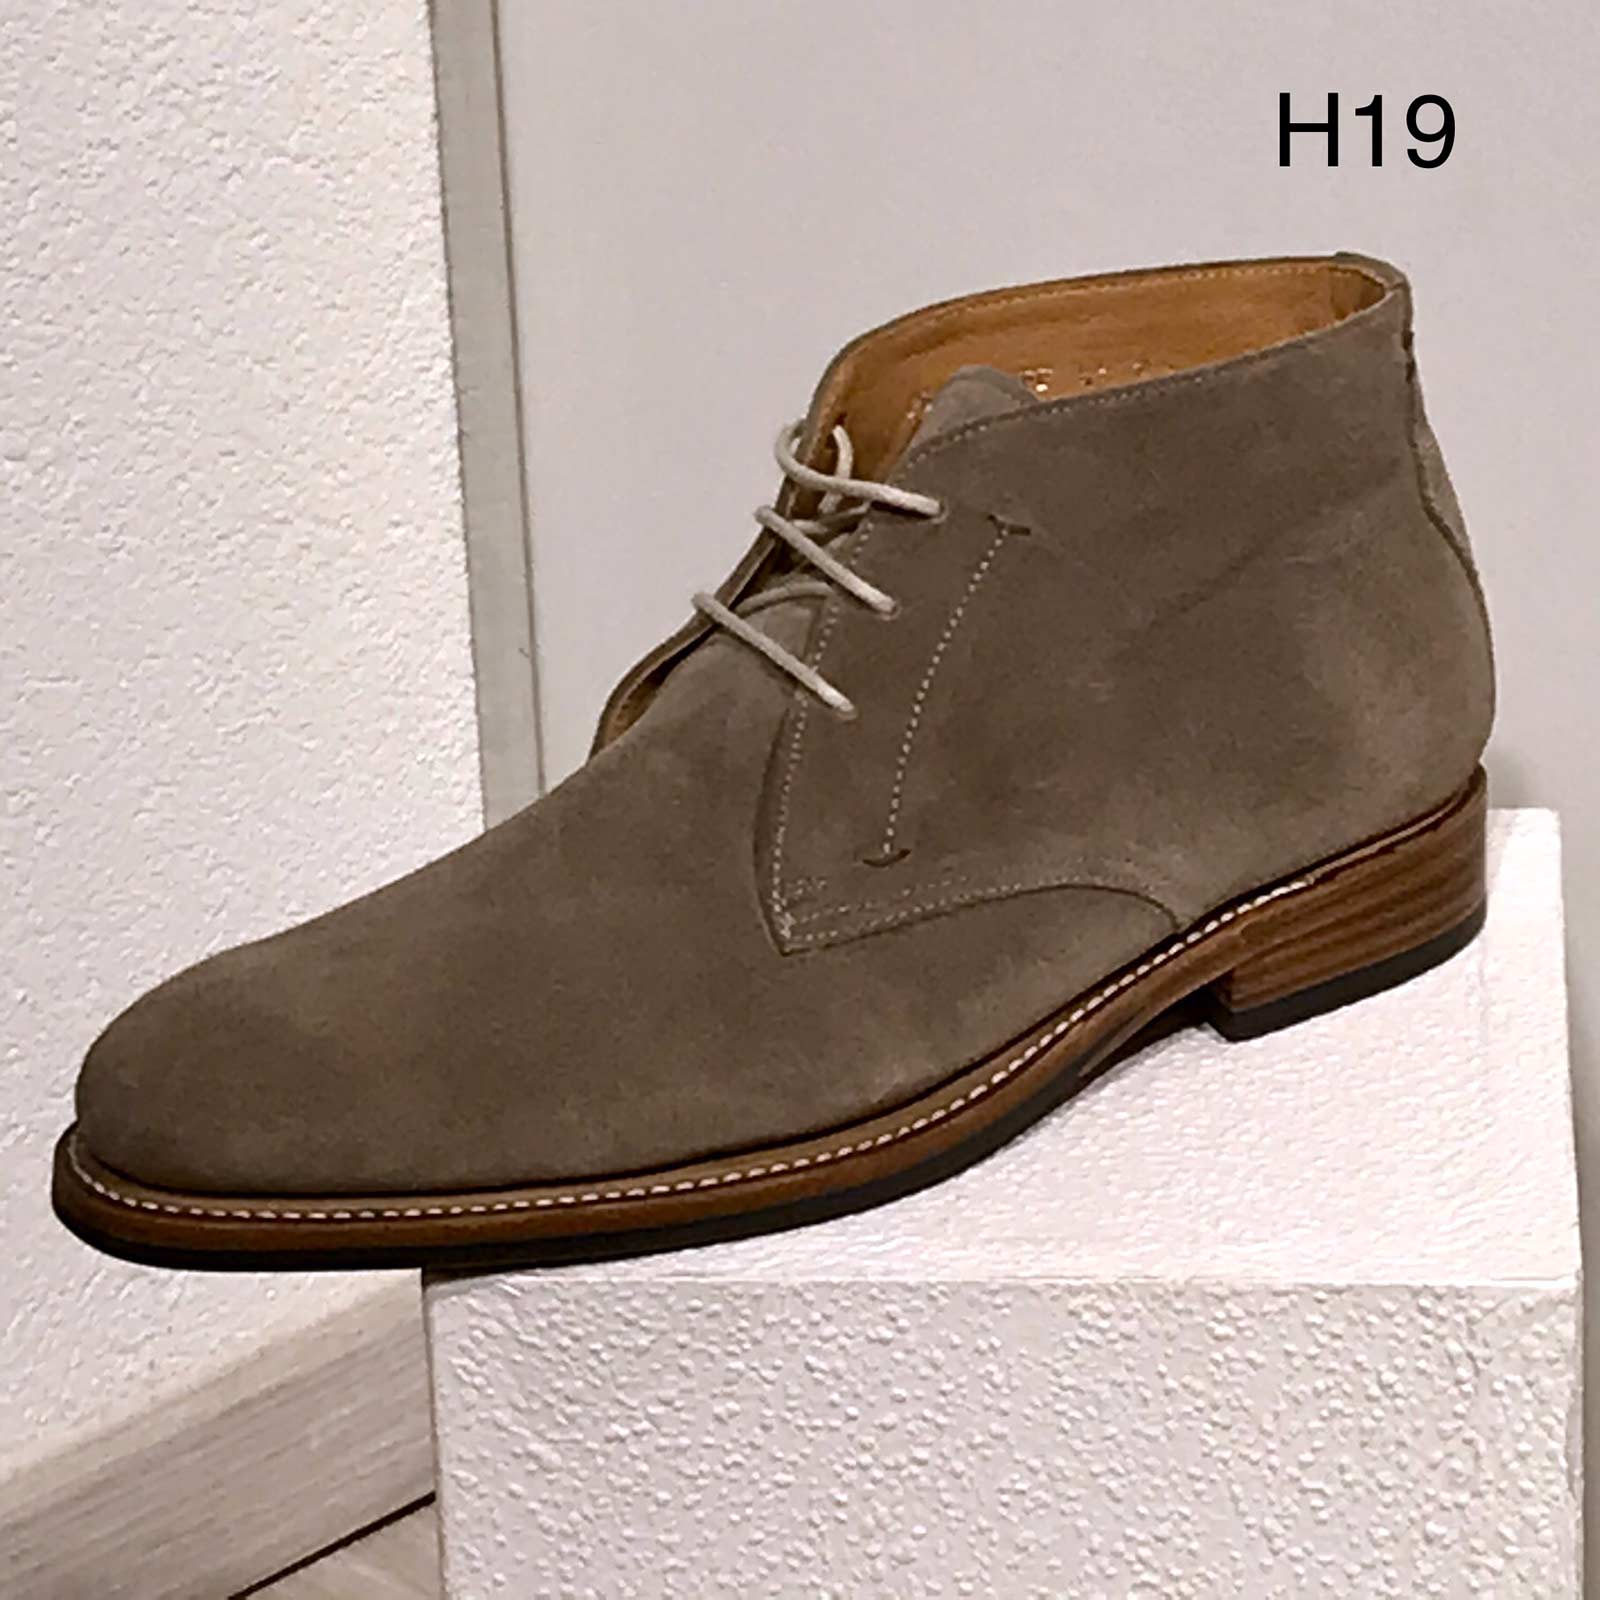 H19 - Schuhe von Prime Shoes